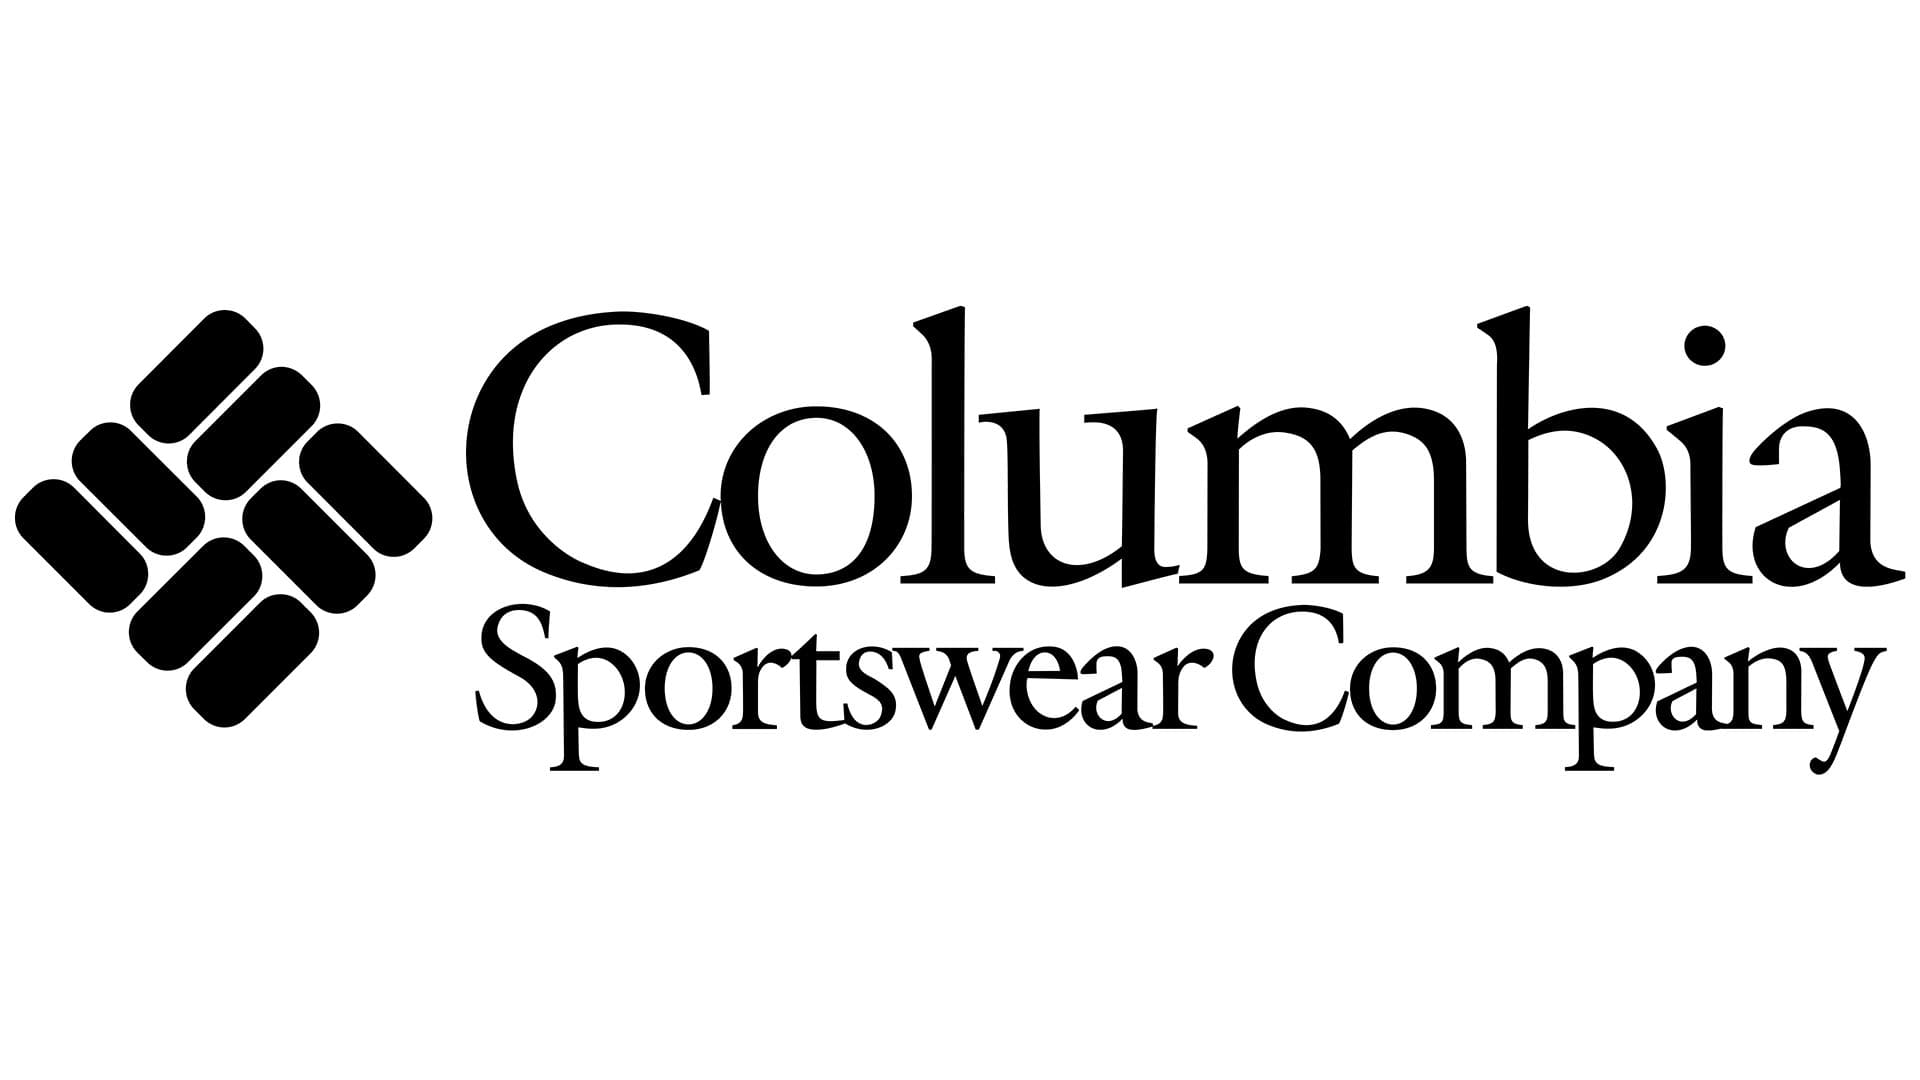 Columbia University Logo SVG